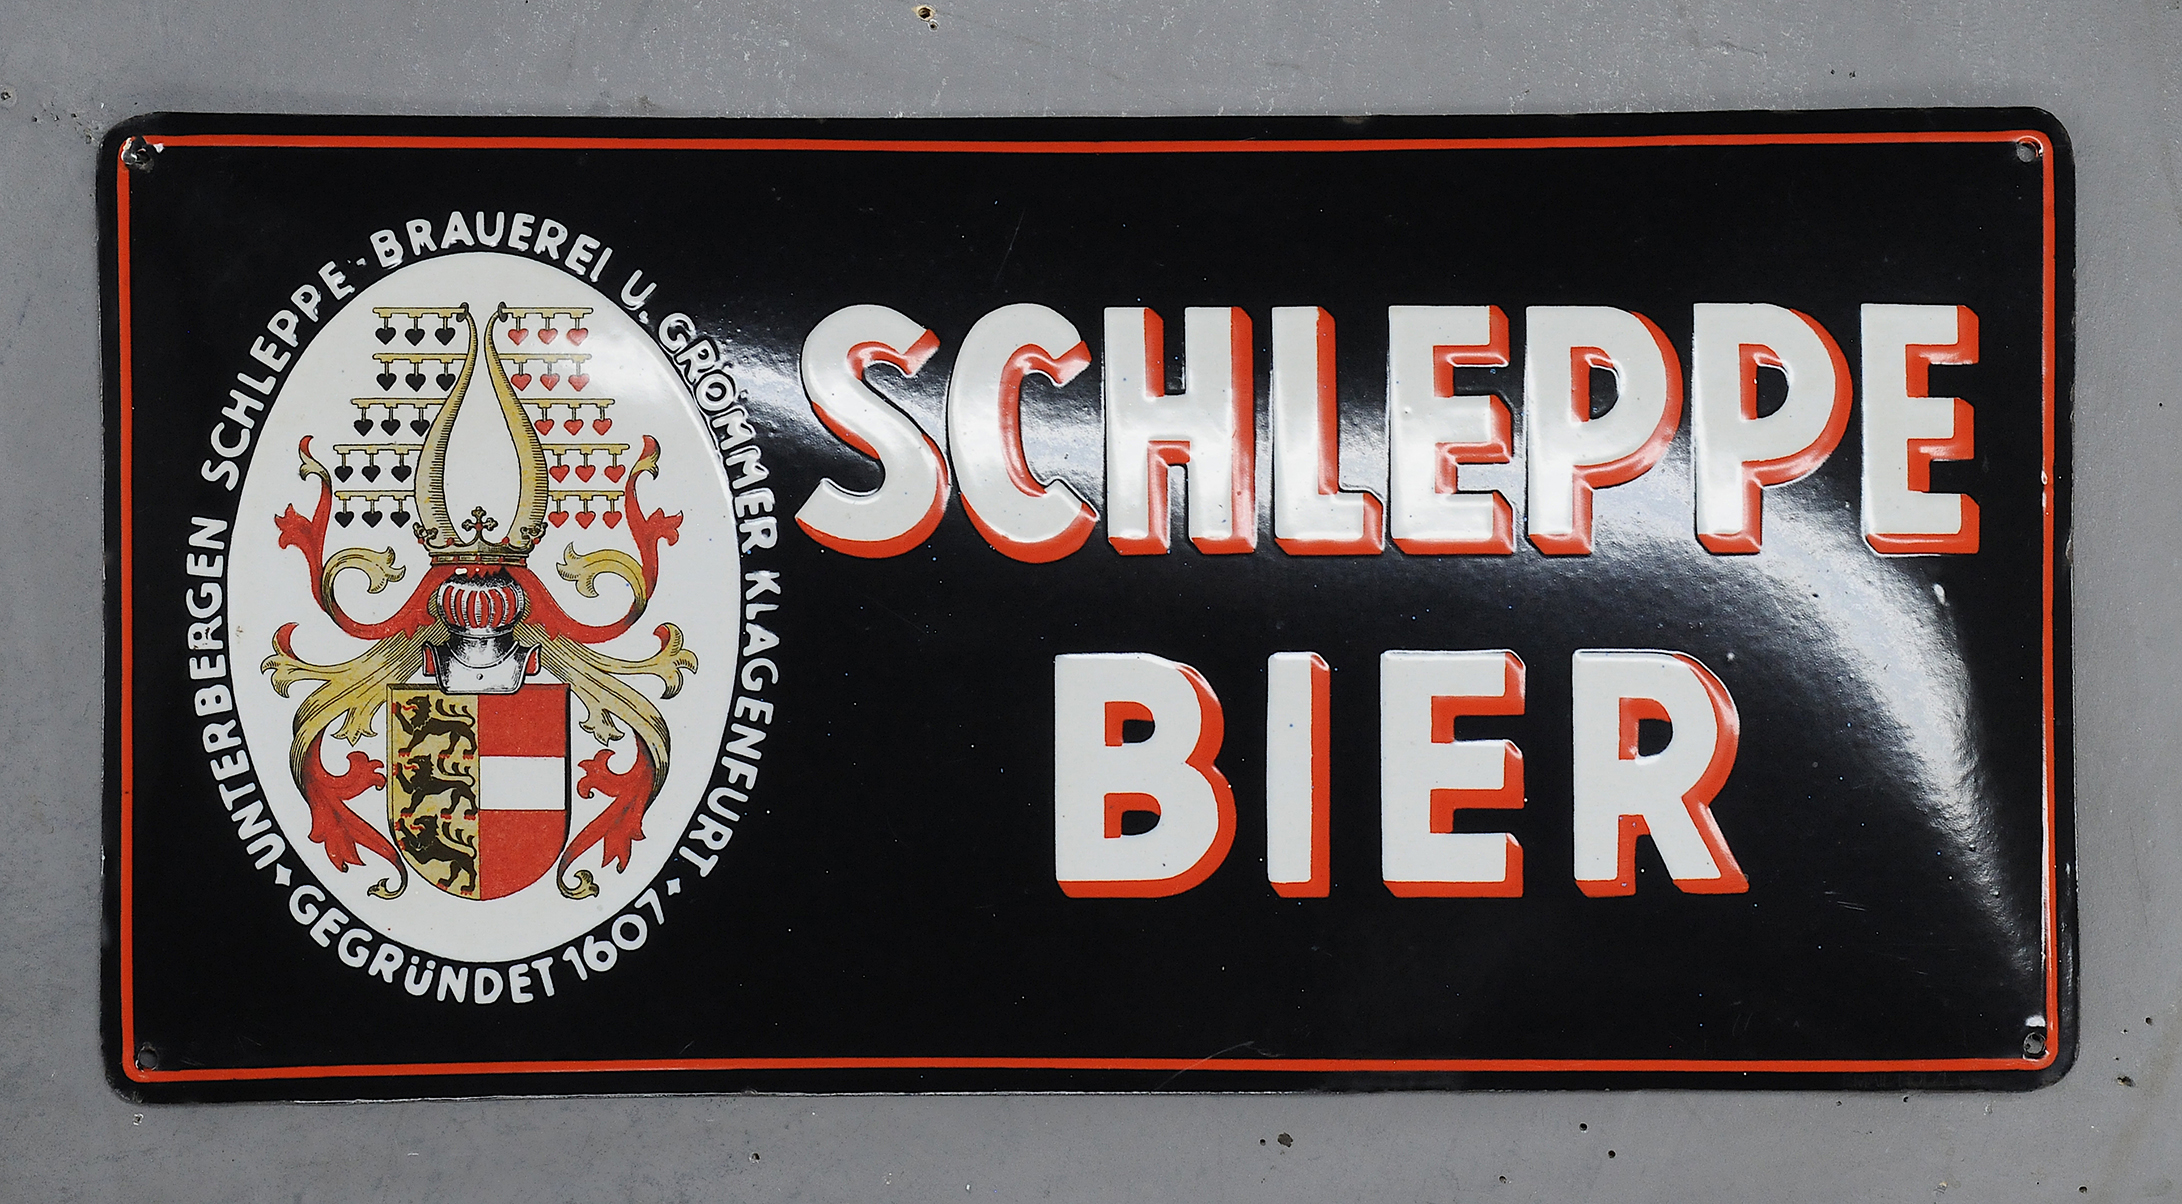 Schleppe Bier - Image 3 of 3